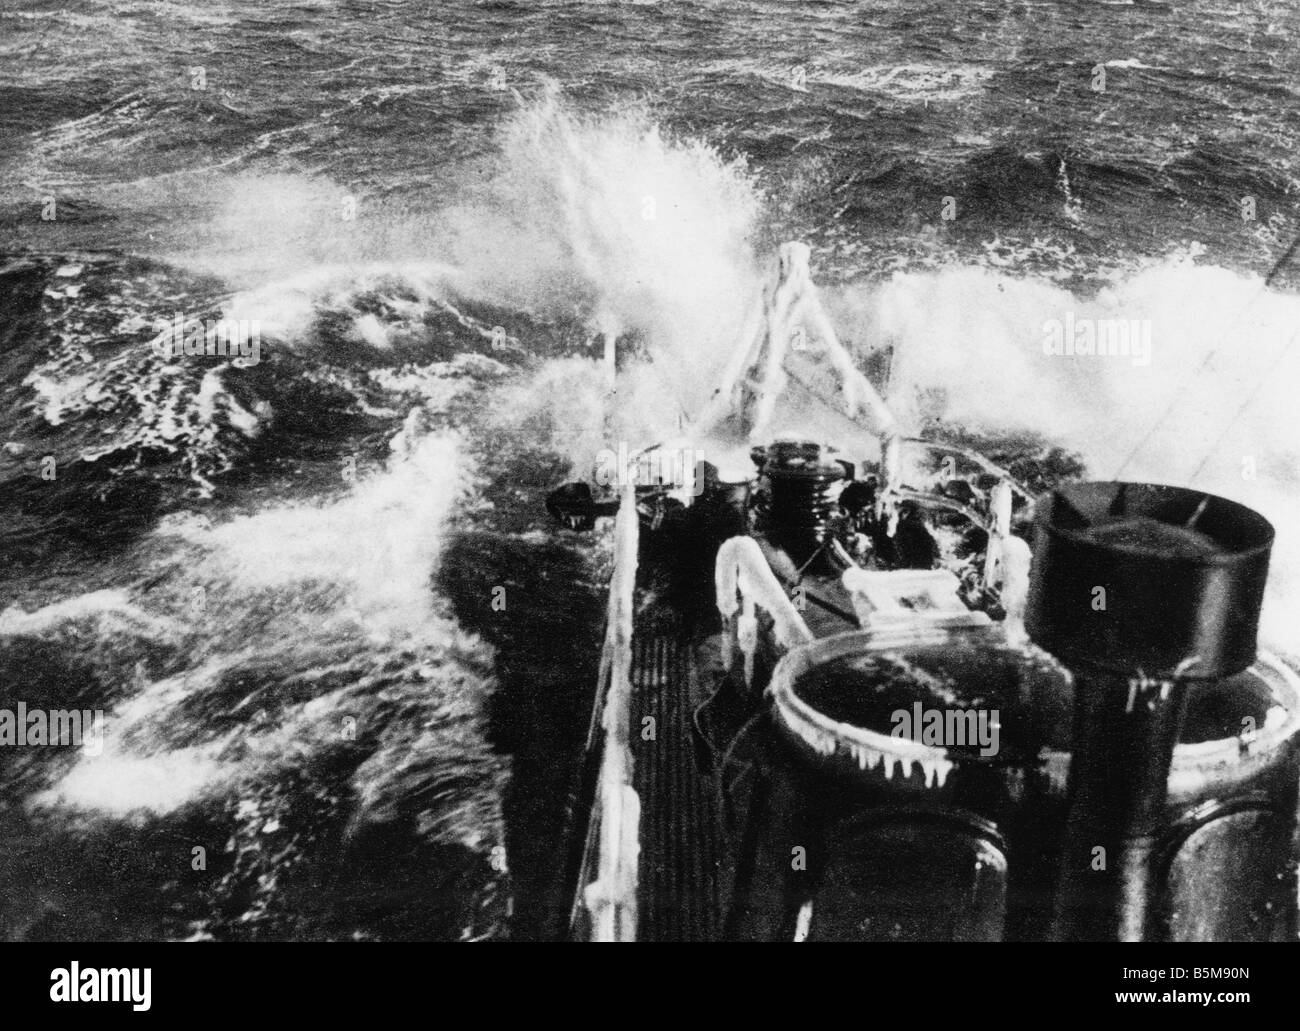 WW1 German navy torpedo ship History First World War Naval war Torpedo ship of the German navy in heavy seas Photo undated Stock Photo